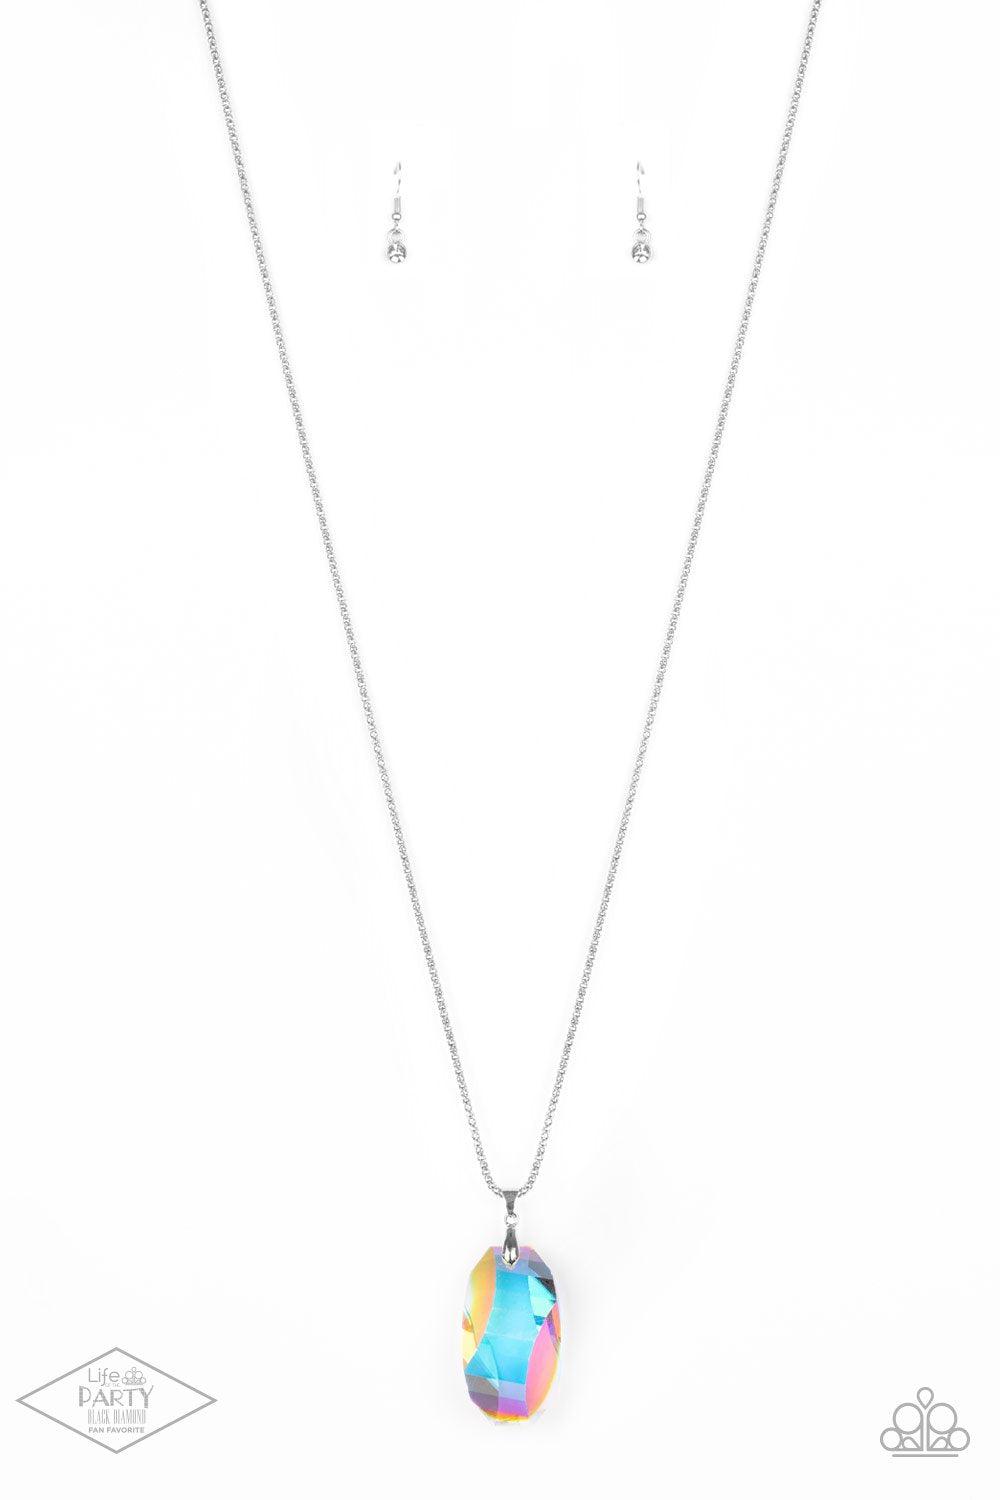 Gemstone Grandeur Multi-color Iridescent Gem Necklace - Paparazzi Accessories- lightbox - CarasShop.com - $5 Jewelry by Cara Jewels